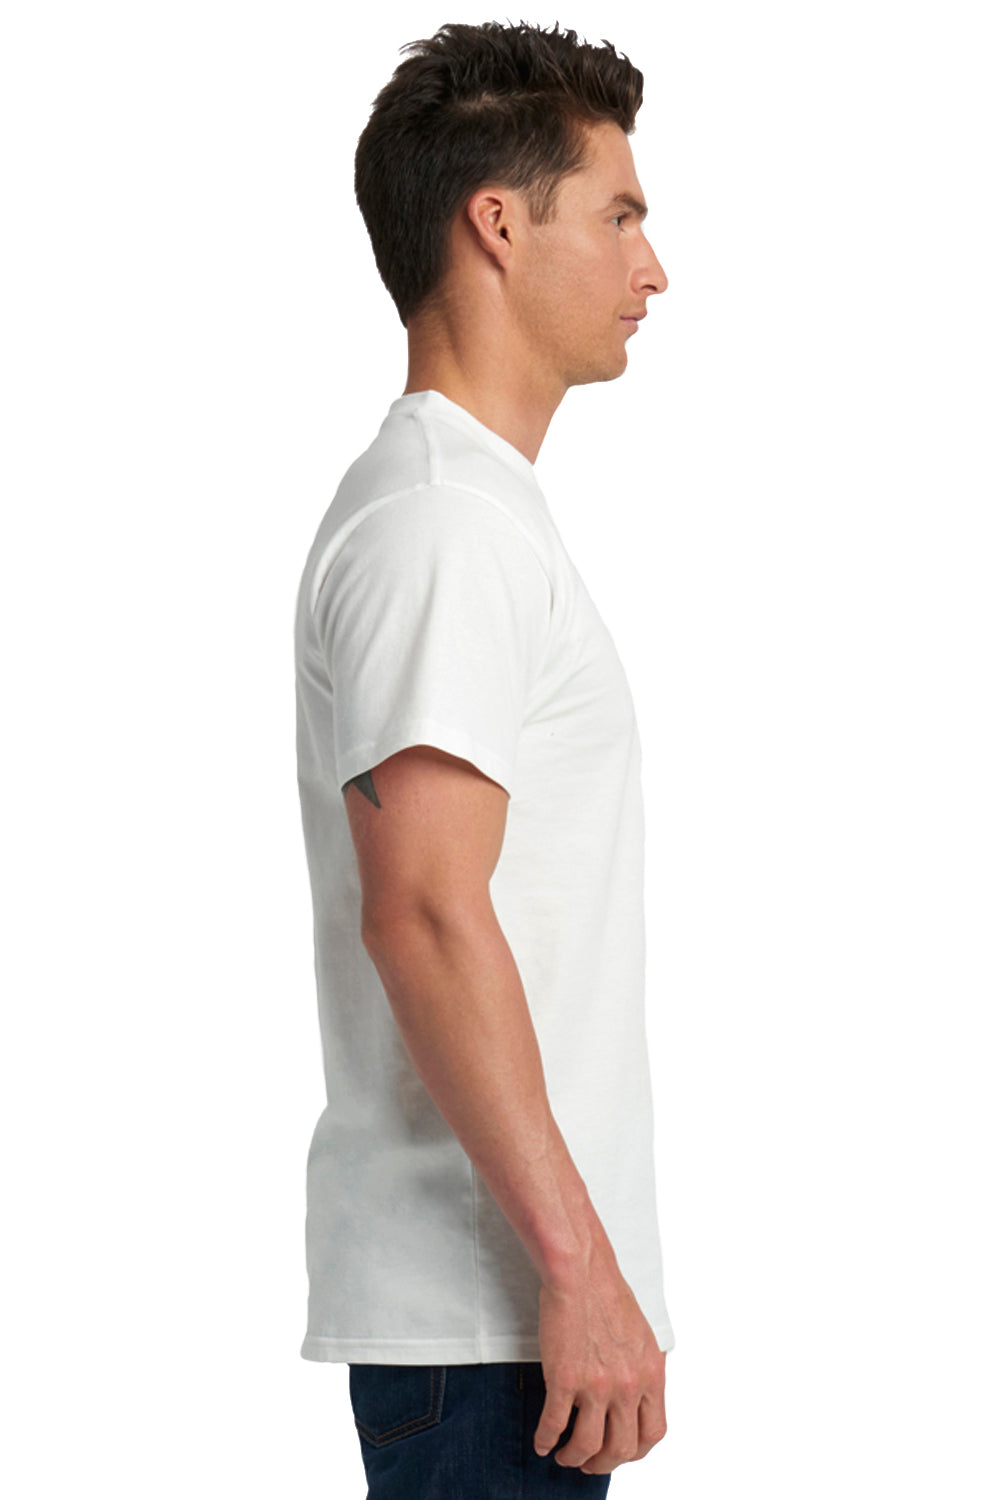 Next Level 7410 Mens Inspired Dye Jersey Short Sleeve Crewneck T-Shirt White Side